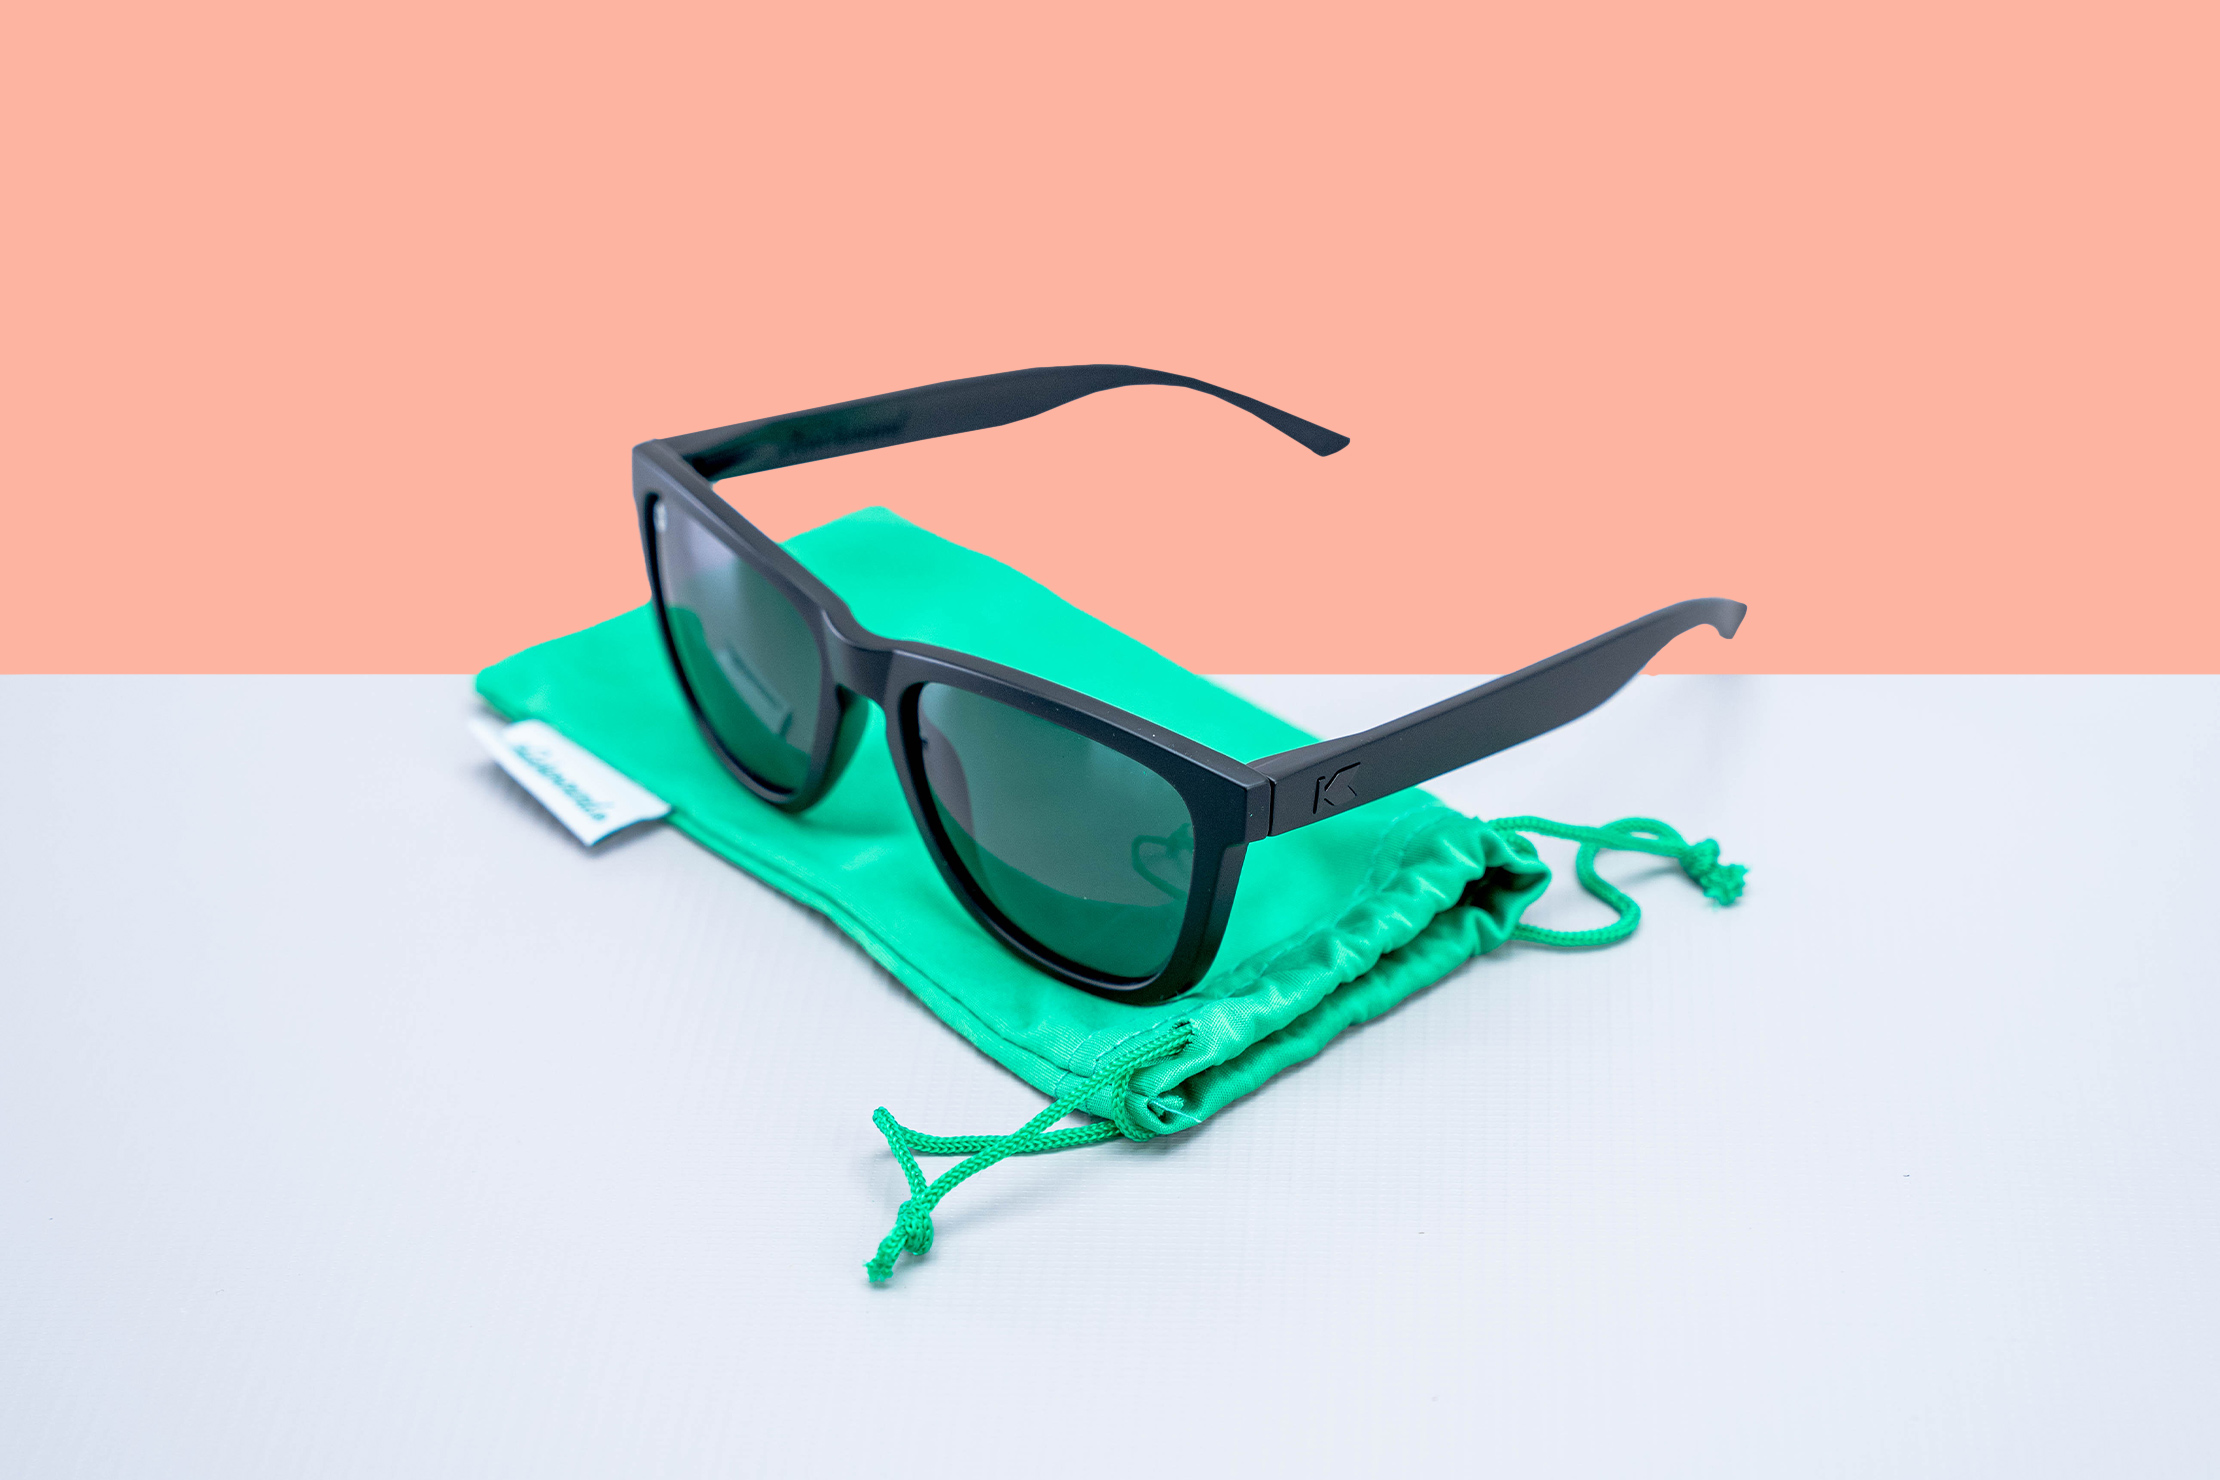 Diannasun Polarized Sunglasses For Men And Women Semi-Rimless Frame Driving Sun Glasses 100% Uv Blocking